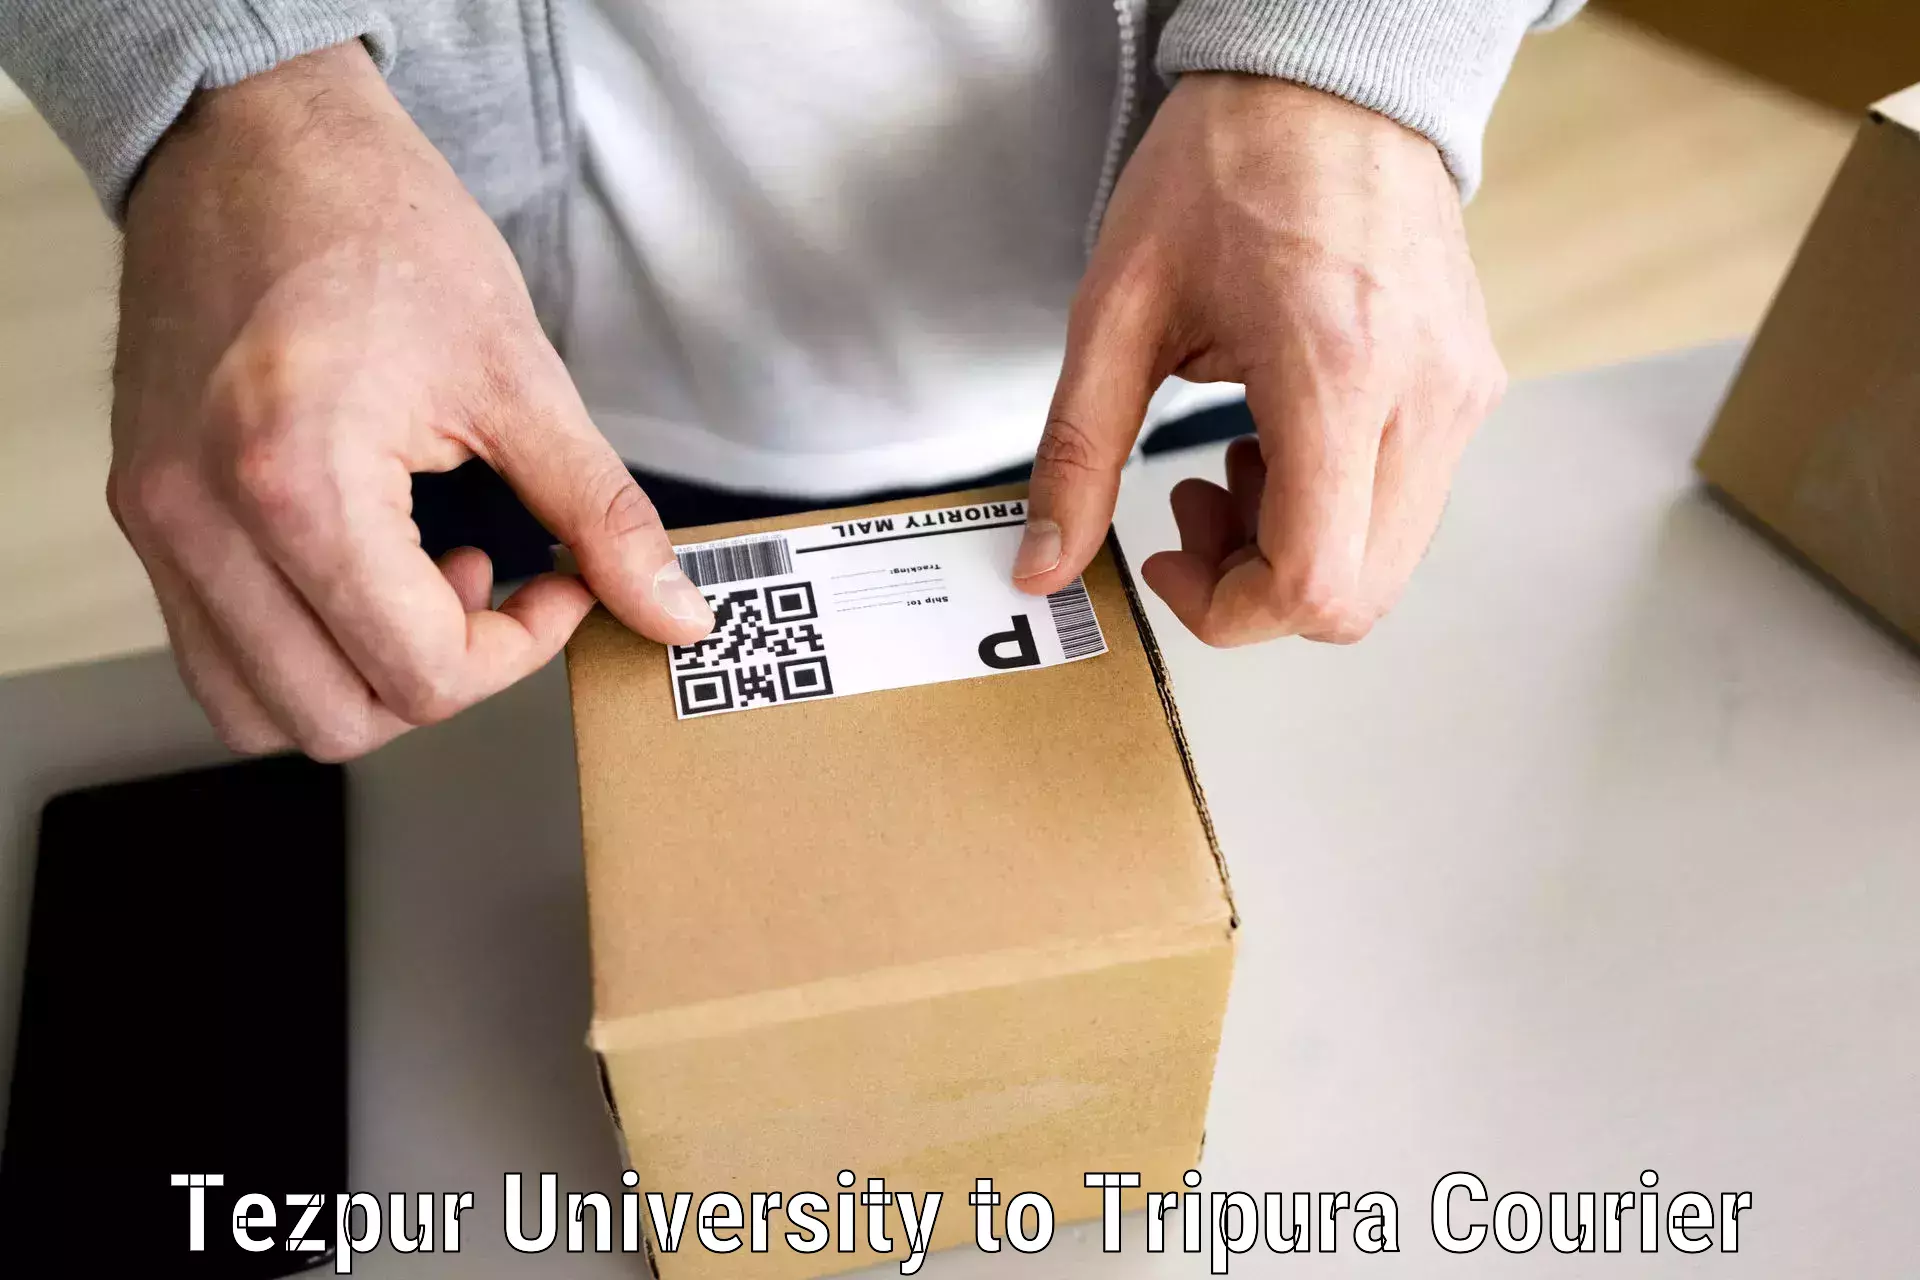 Home goods moving company Tezpur University to Udaipur Tripura